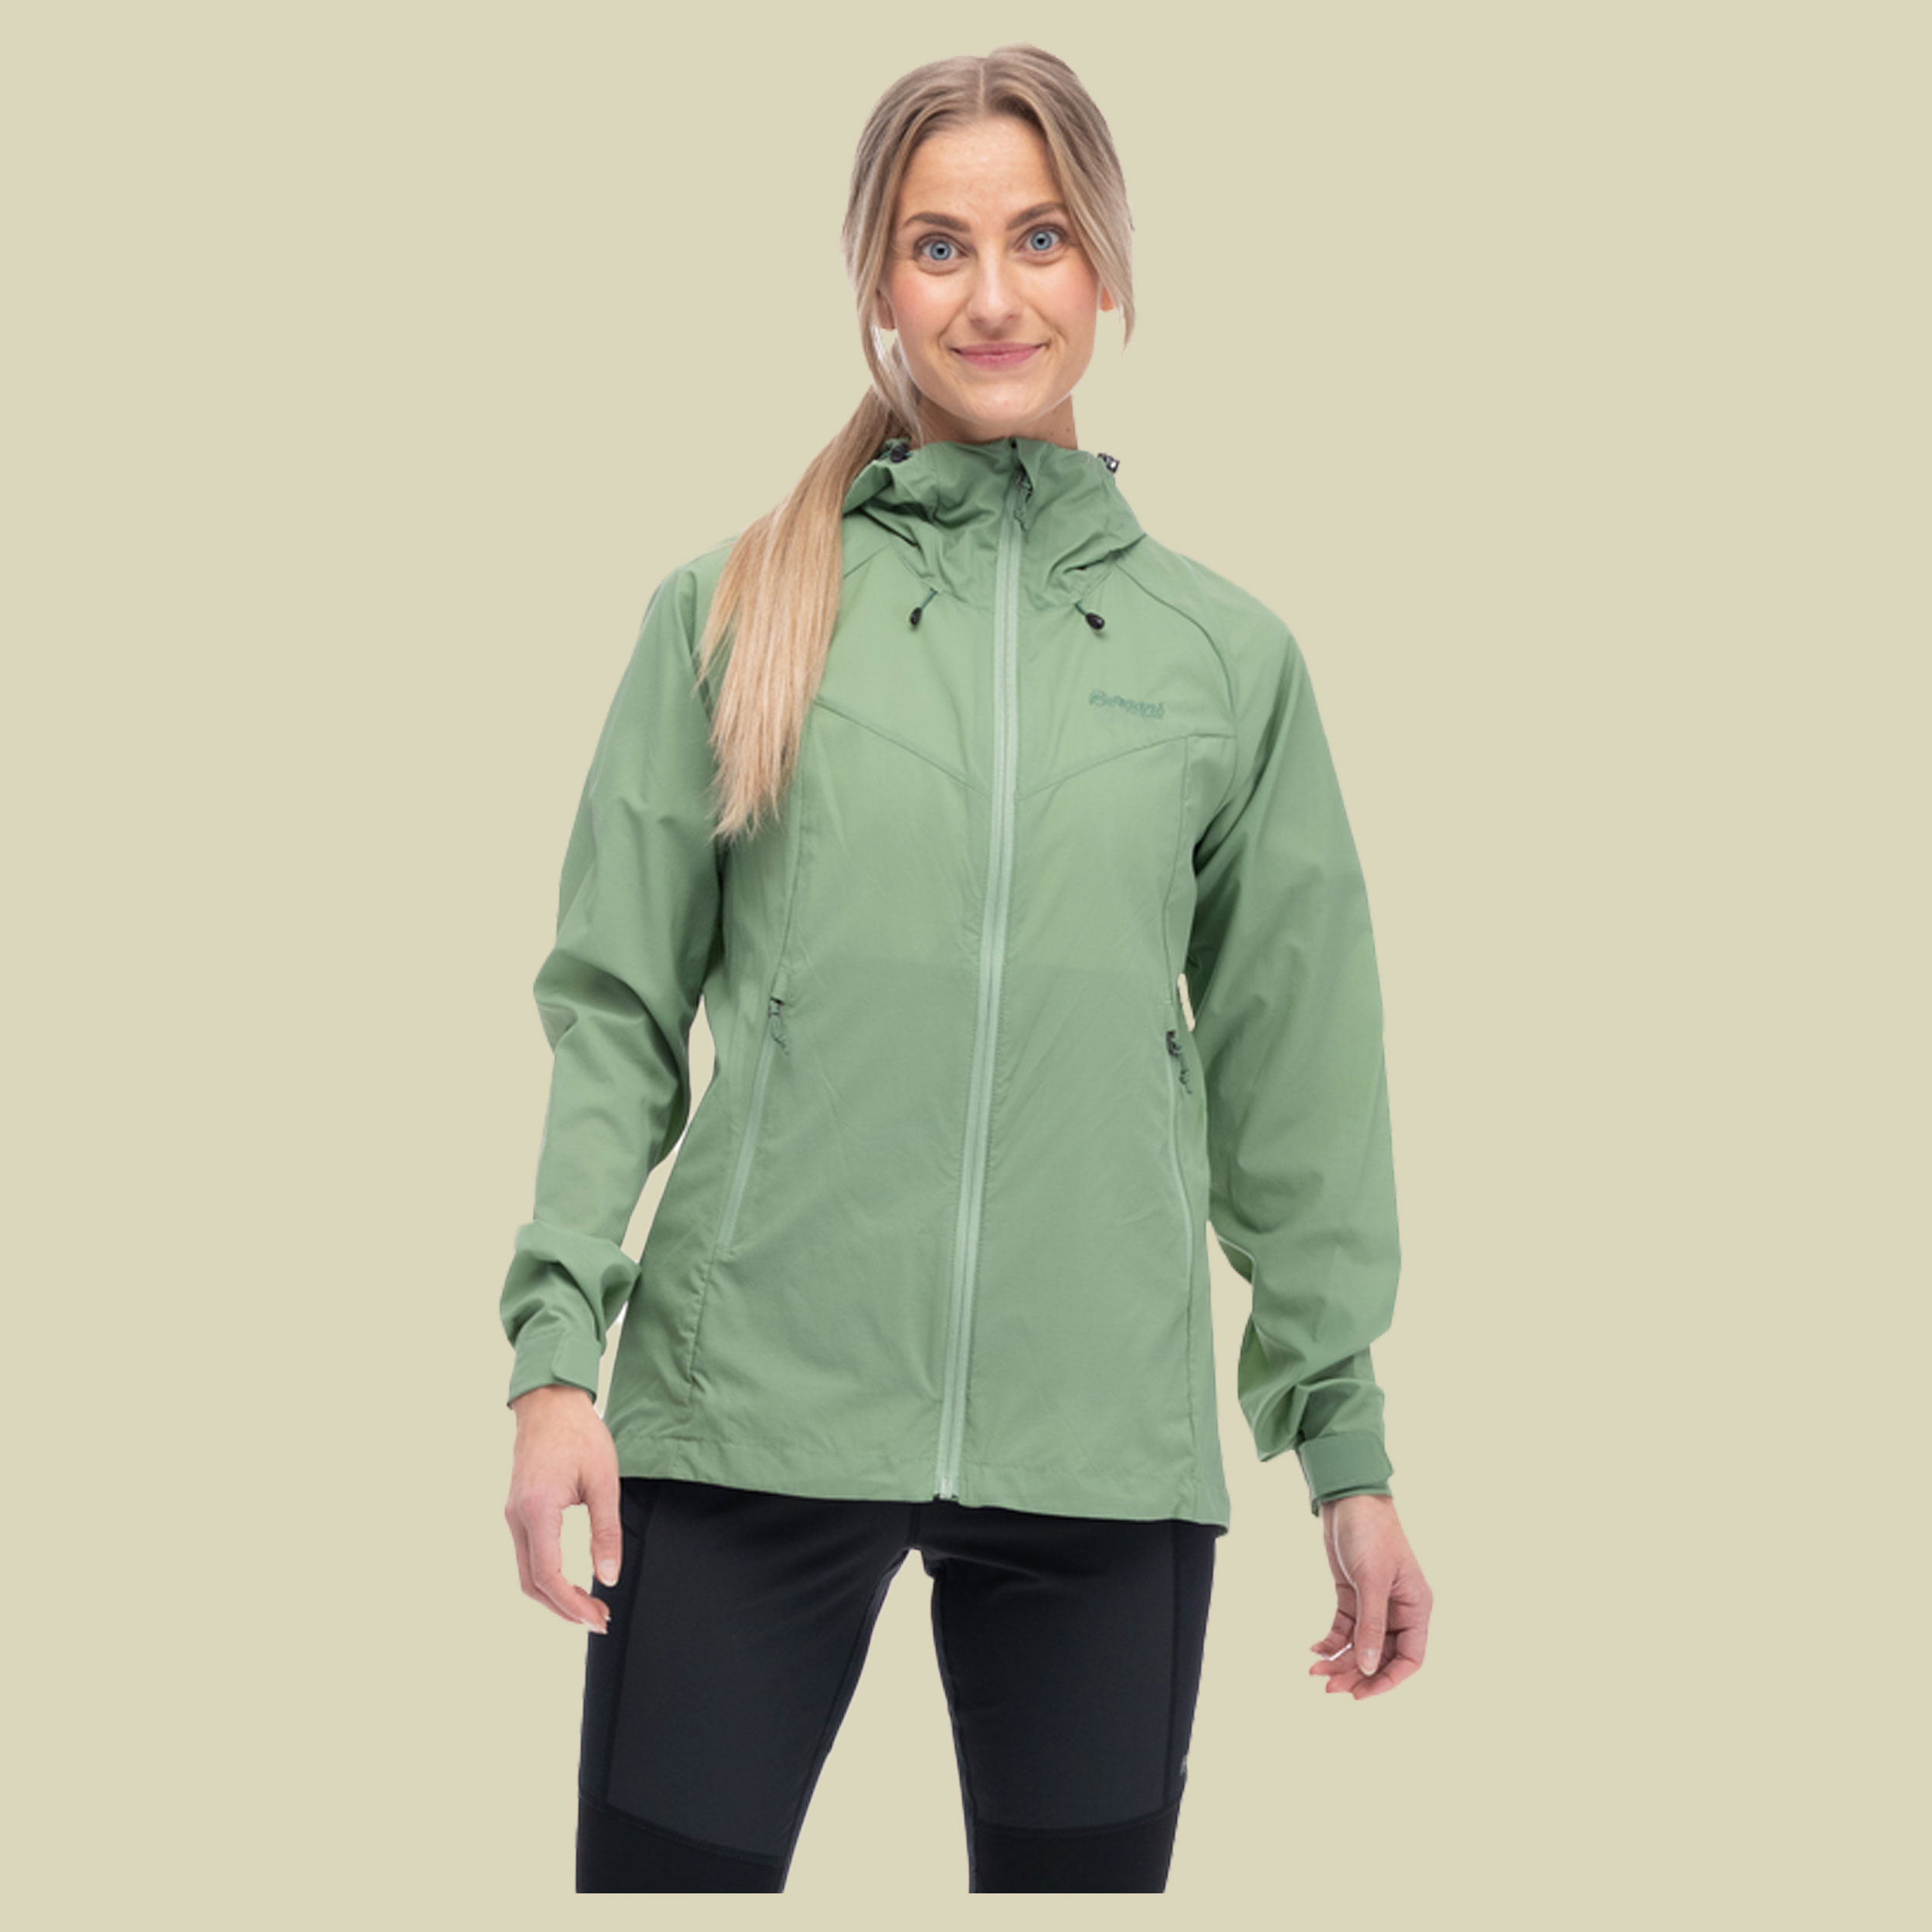 Skar Light Windbreaker Jacket Women Größe M  Farbe jade green